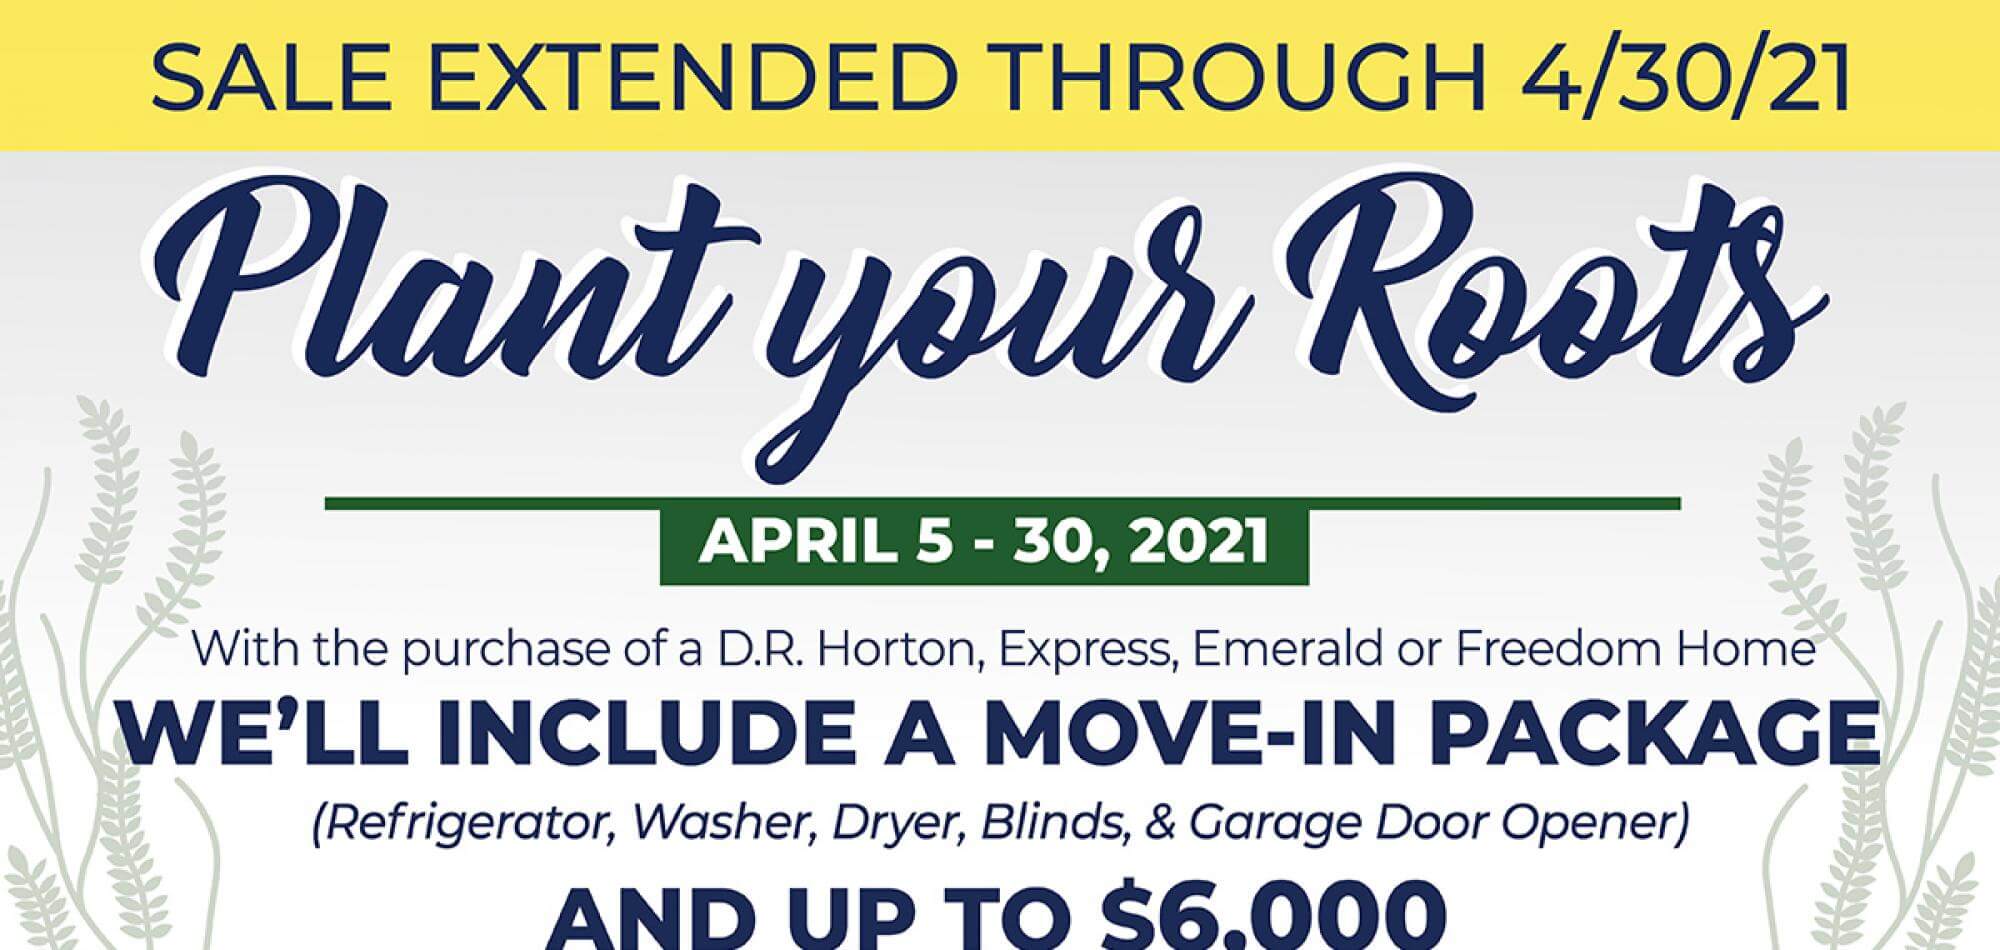 Express Homes April Promotion